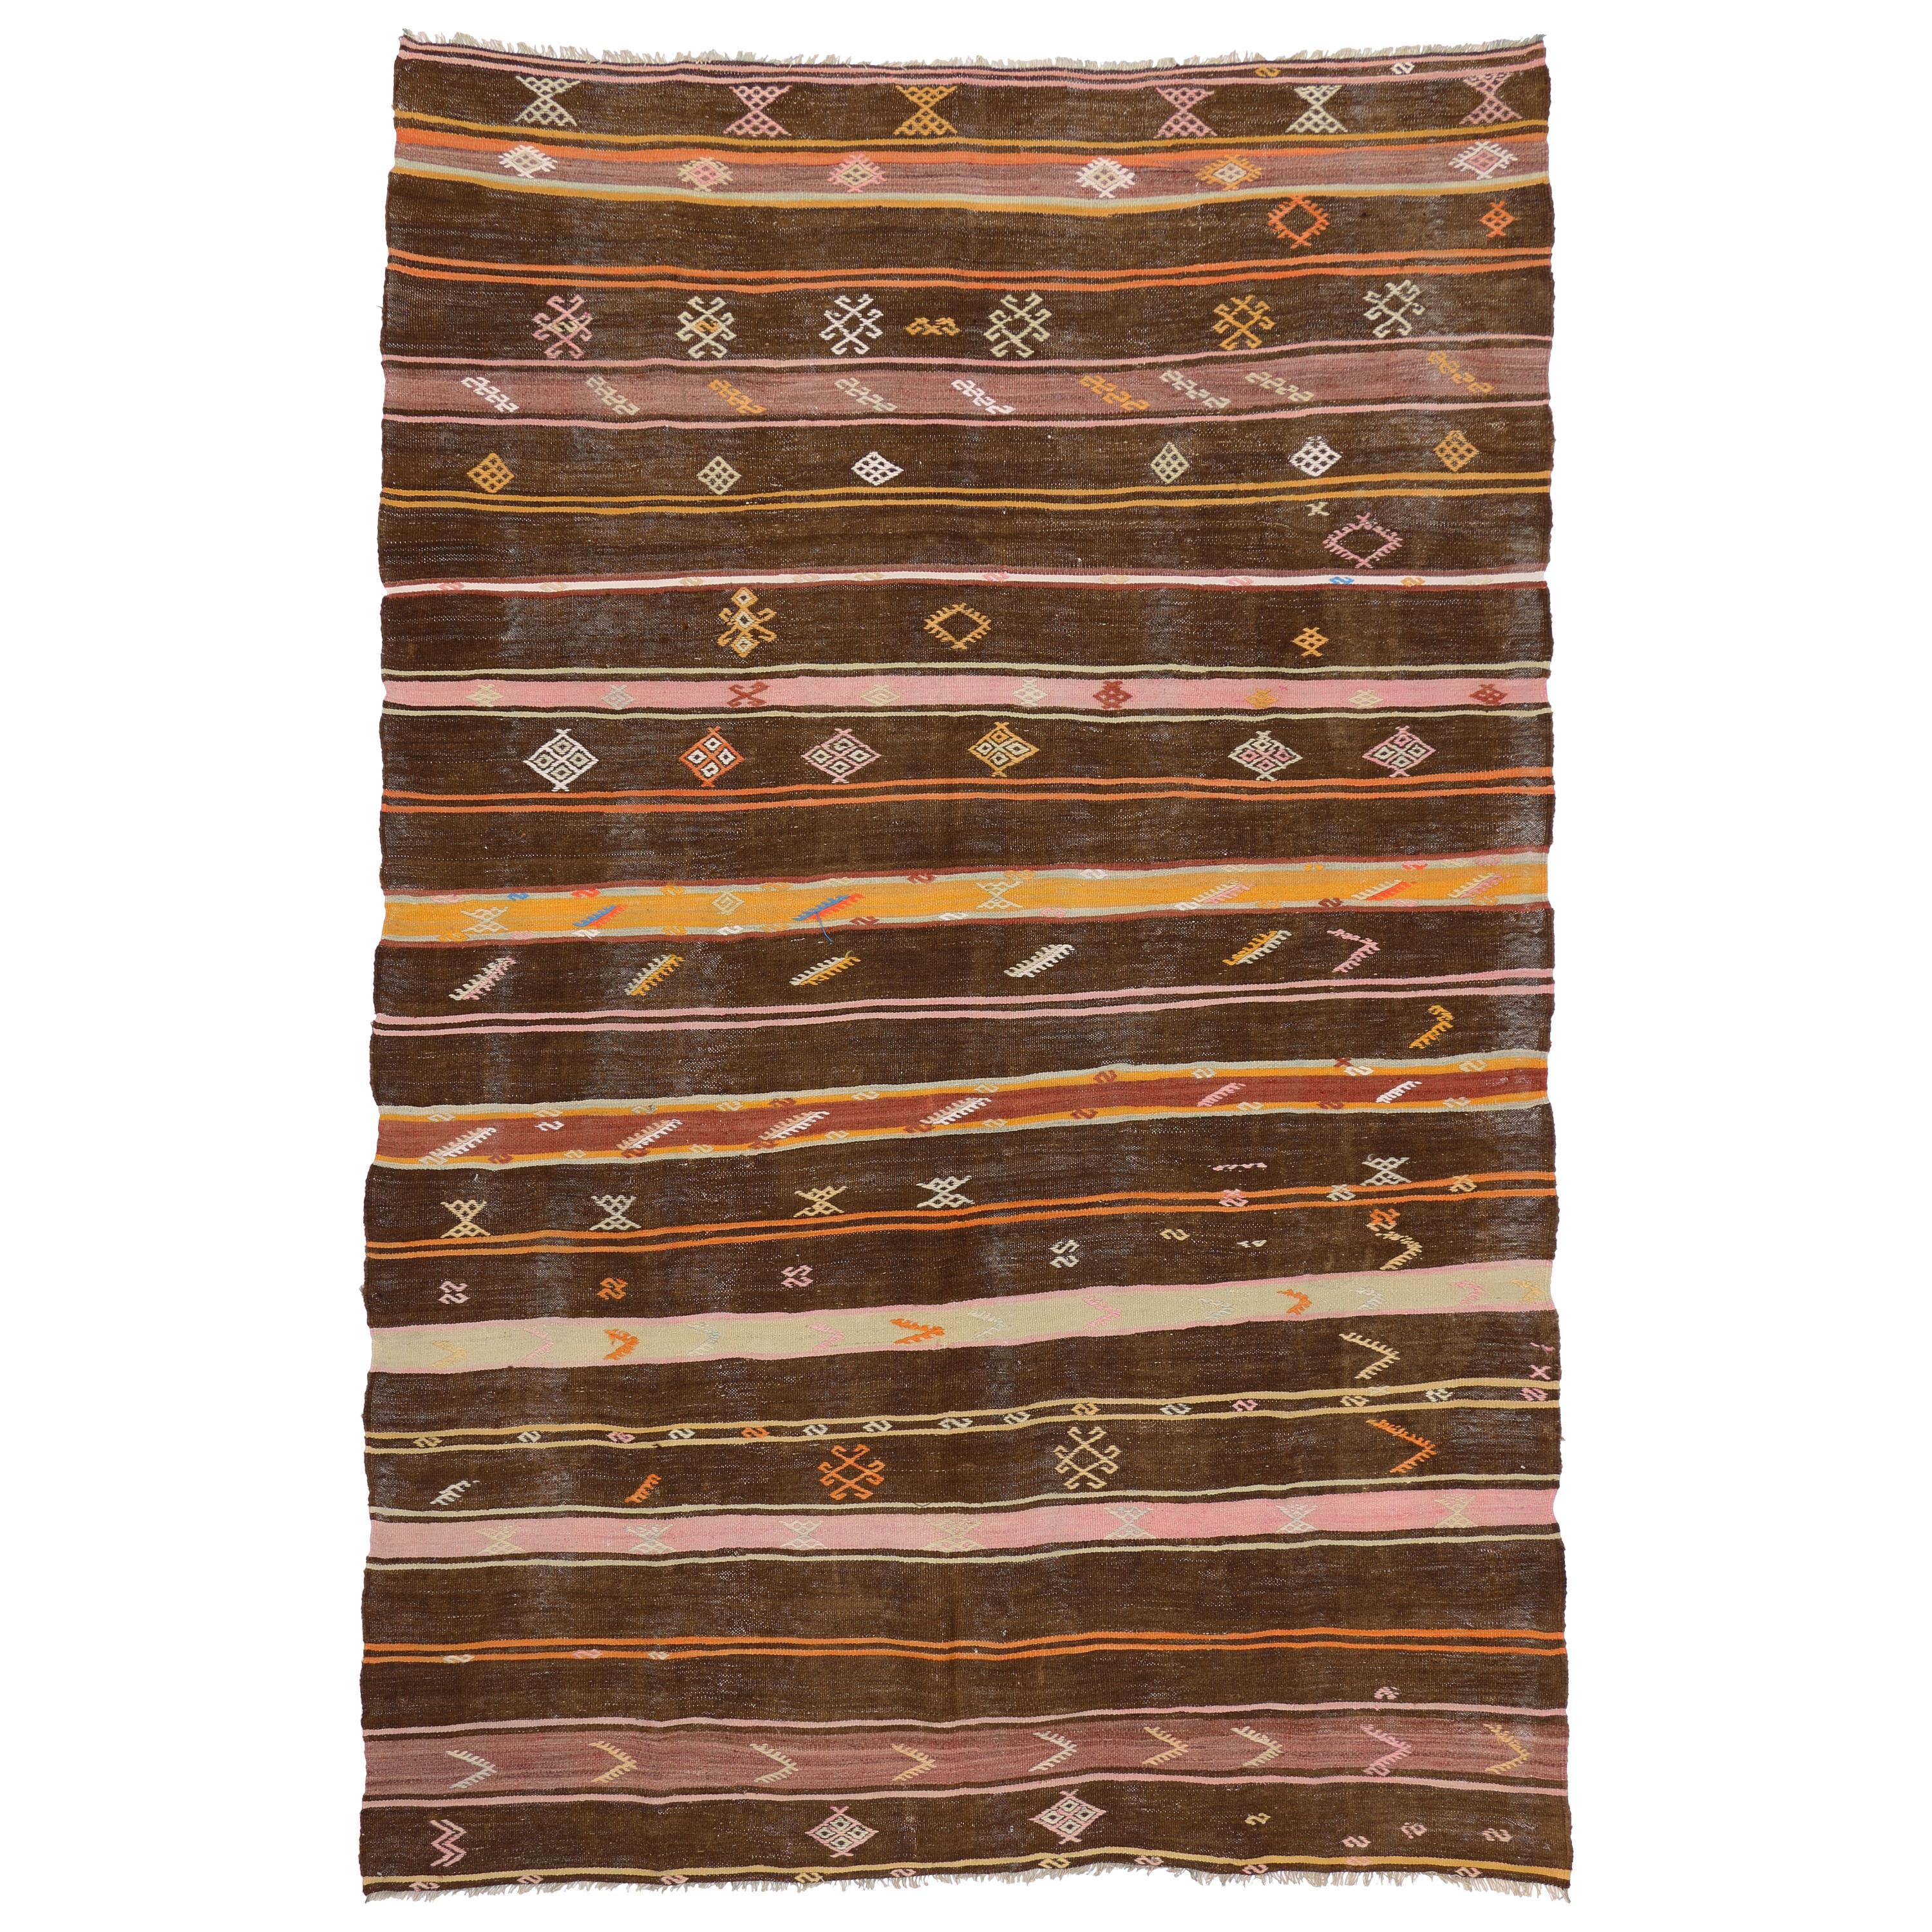 Vintage Turkish Striped Kilim Rug with Bohemian Southwestern Desert Style